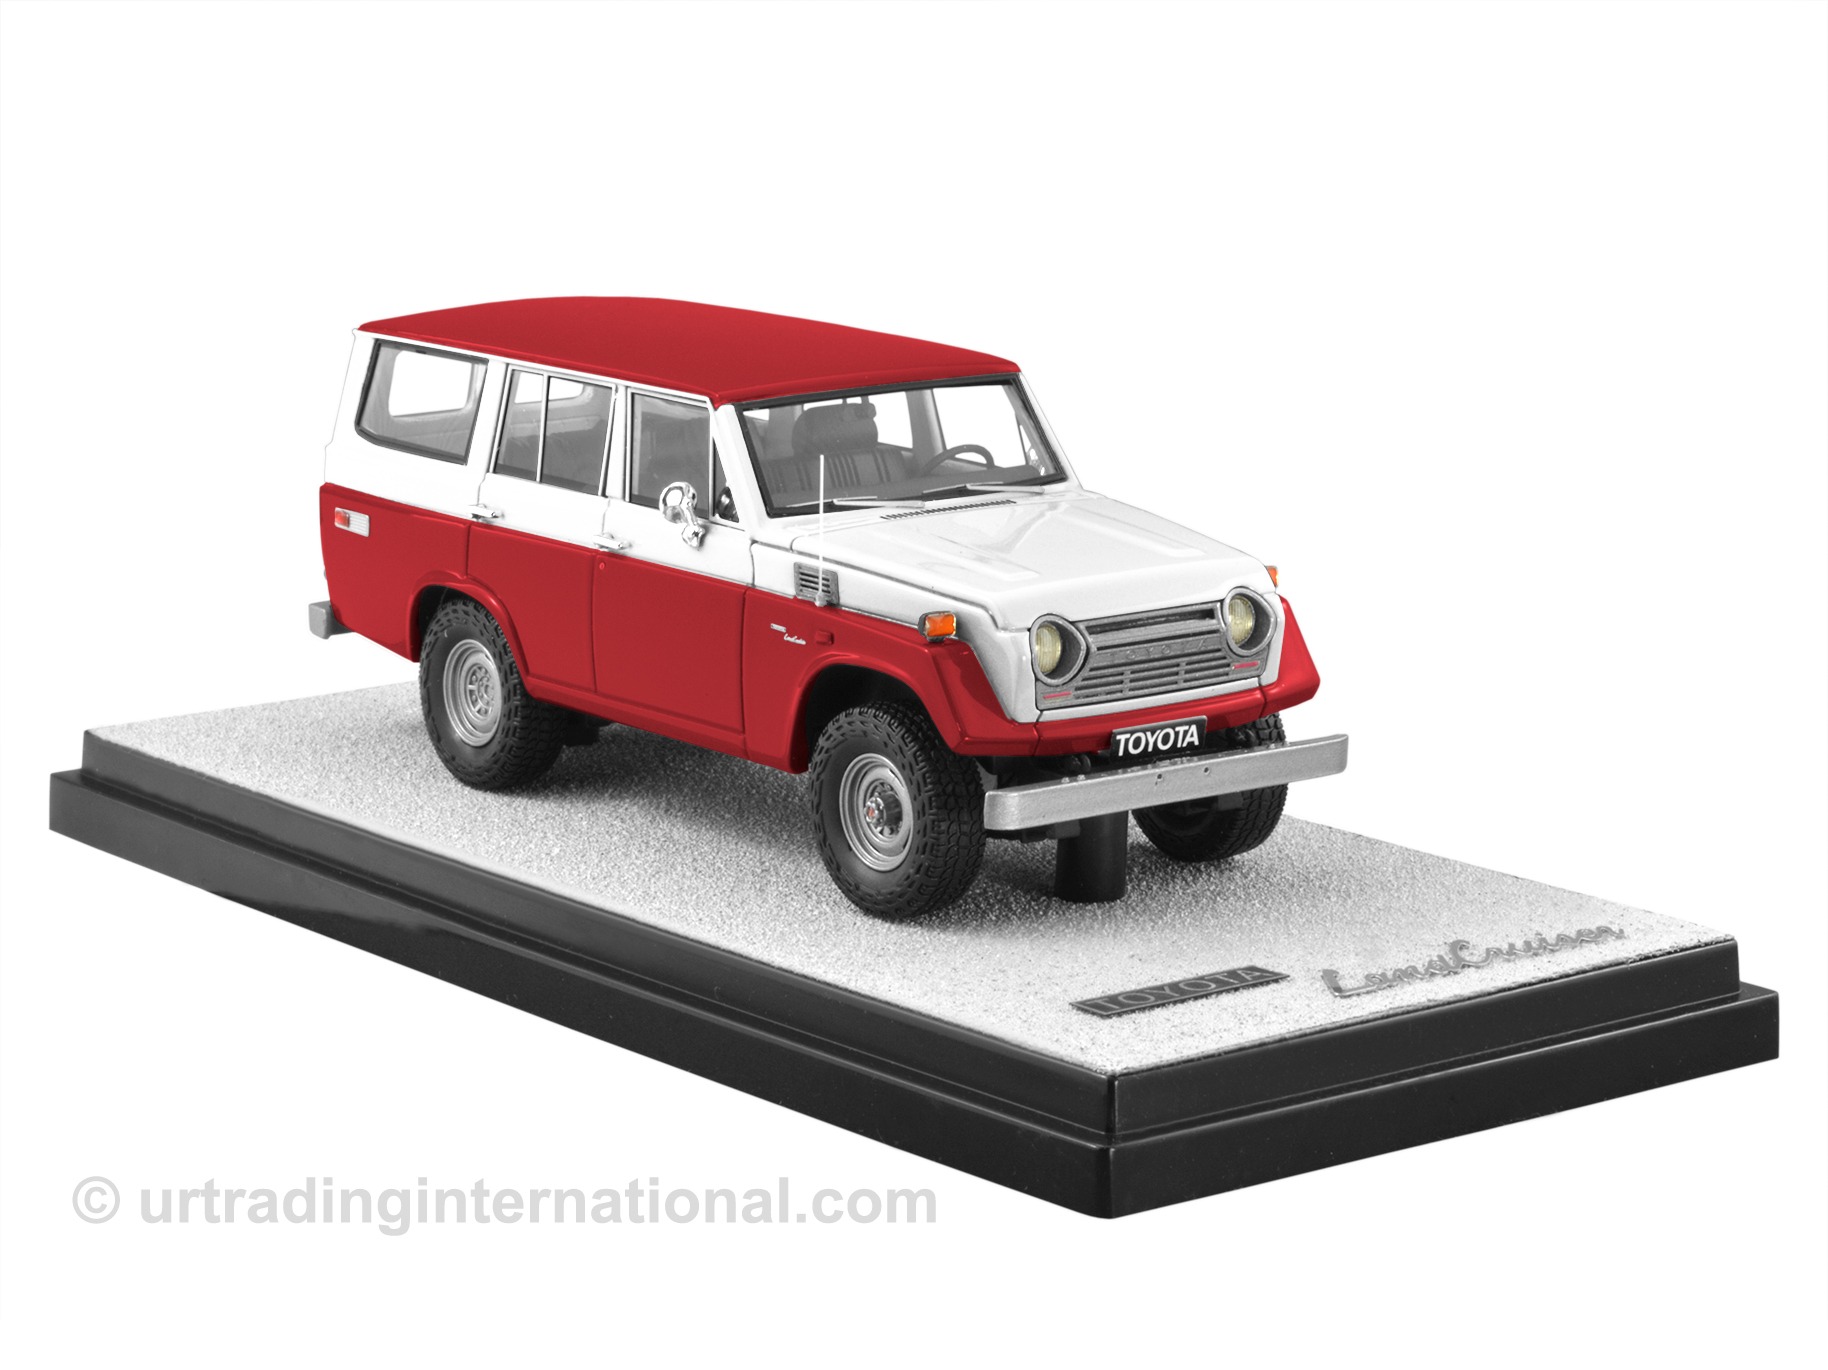 1974 Toyota Land Cruiser FJ55 – Red/White LHD